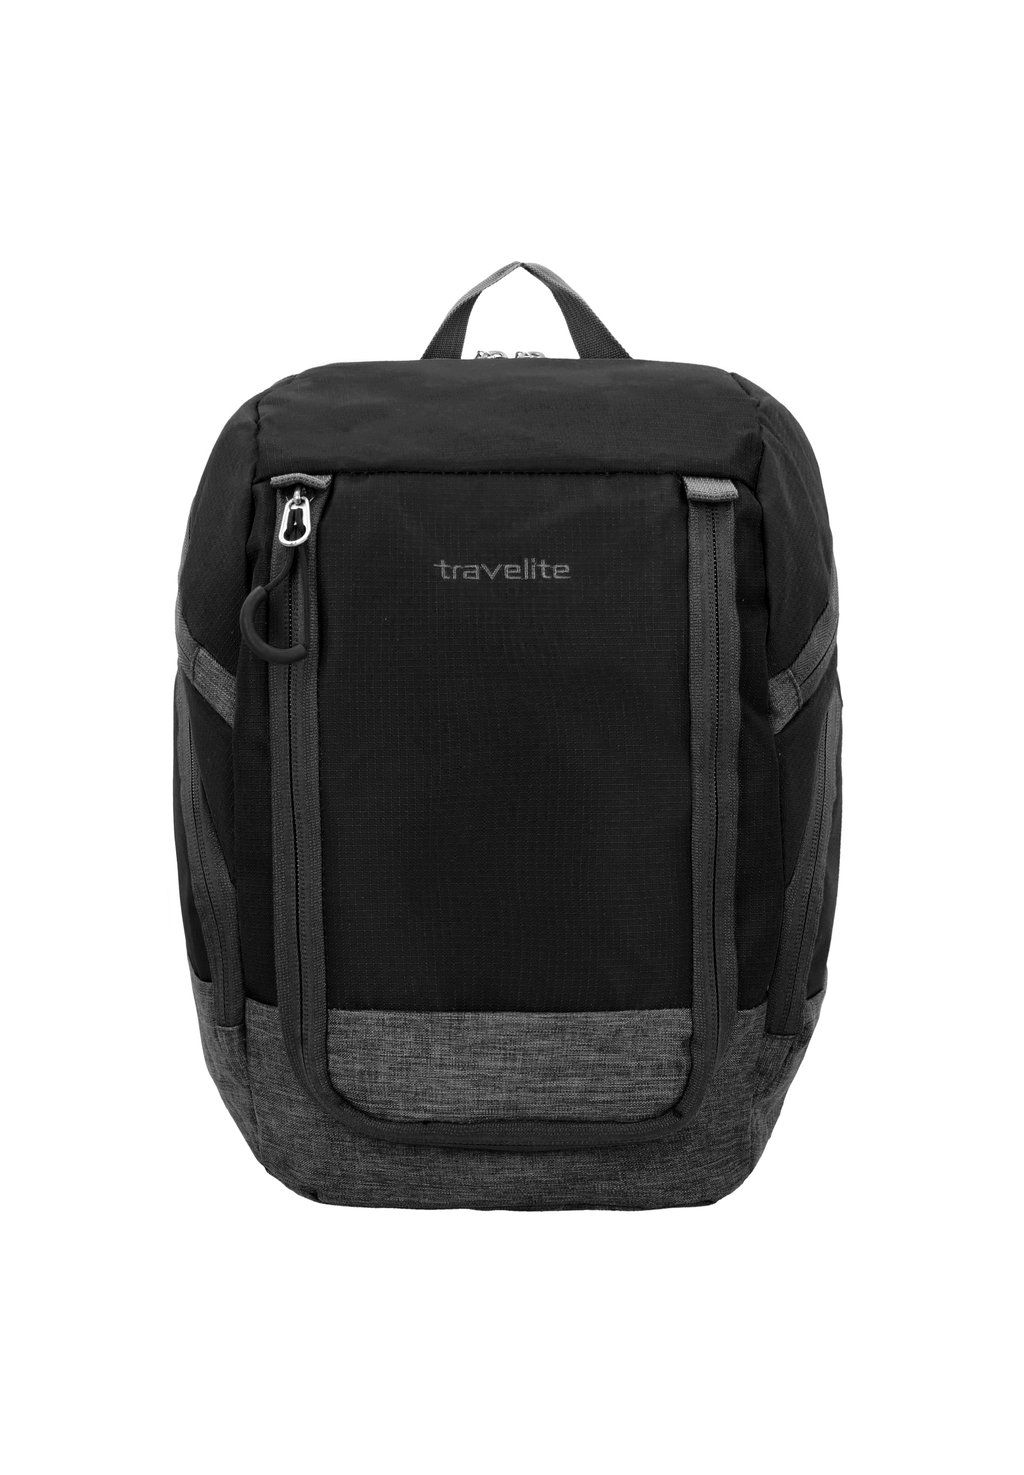 Рюкзак Travelite, цвет schwarz grau